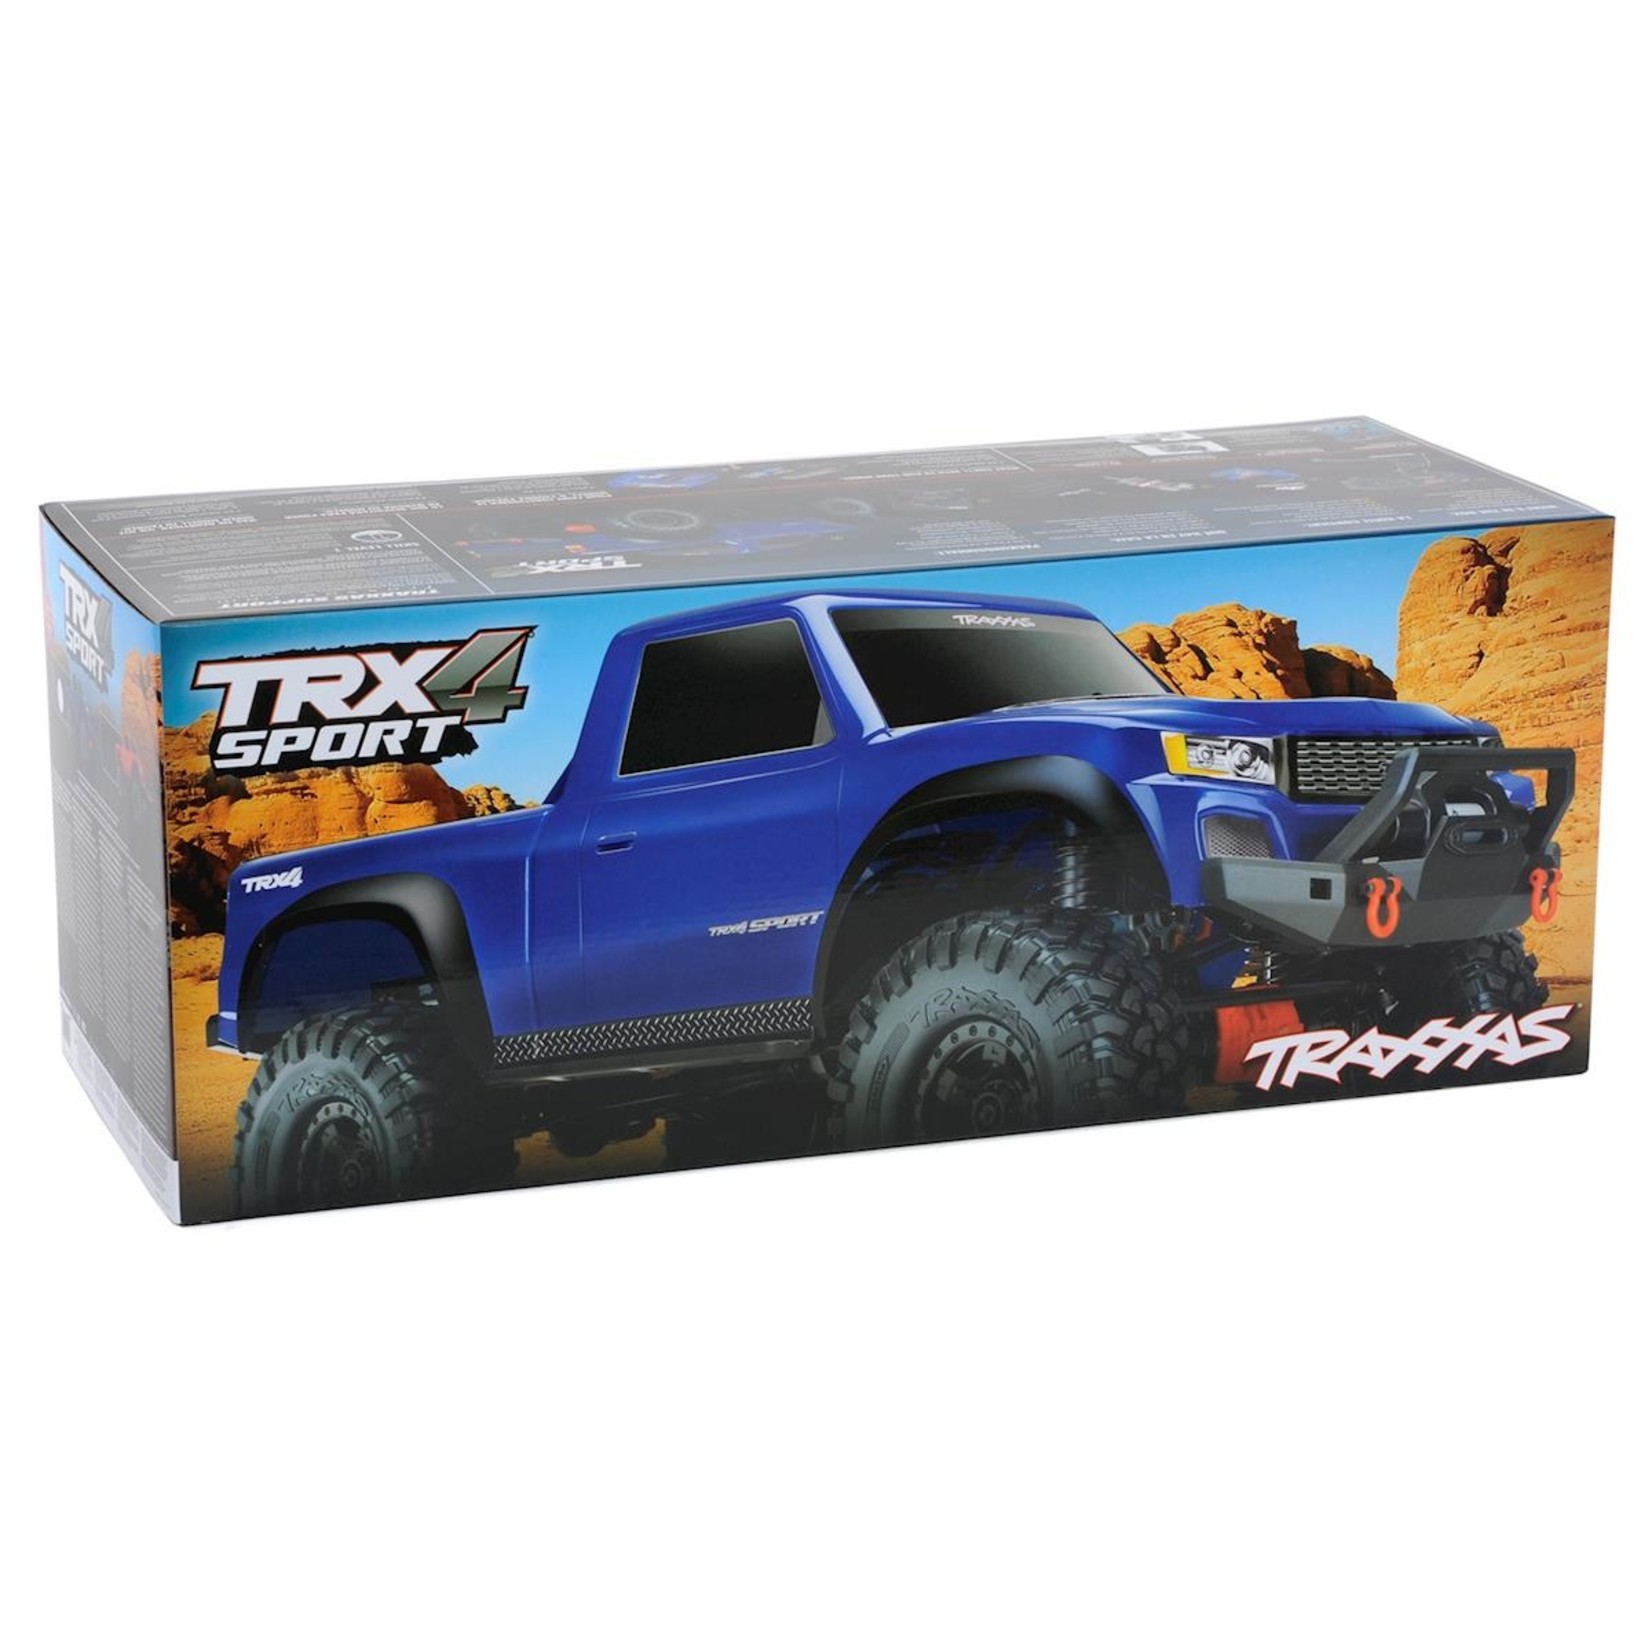 Traxxas Traxxas TRX-4 Sport 1/10 Scale Trail Rock Crawler (Blue) w/XL-5 HV ESC & TQ 2.4GHz Radio #82024-4-BLUE